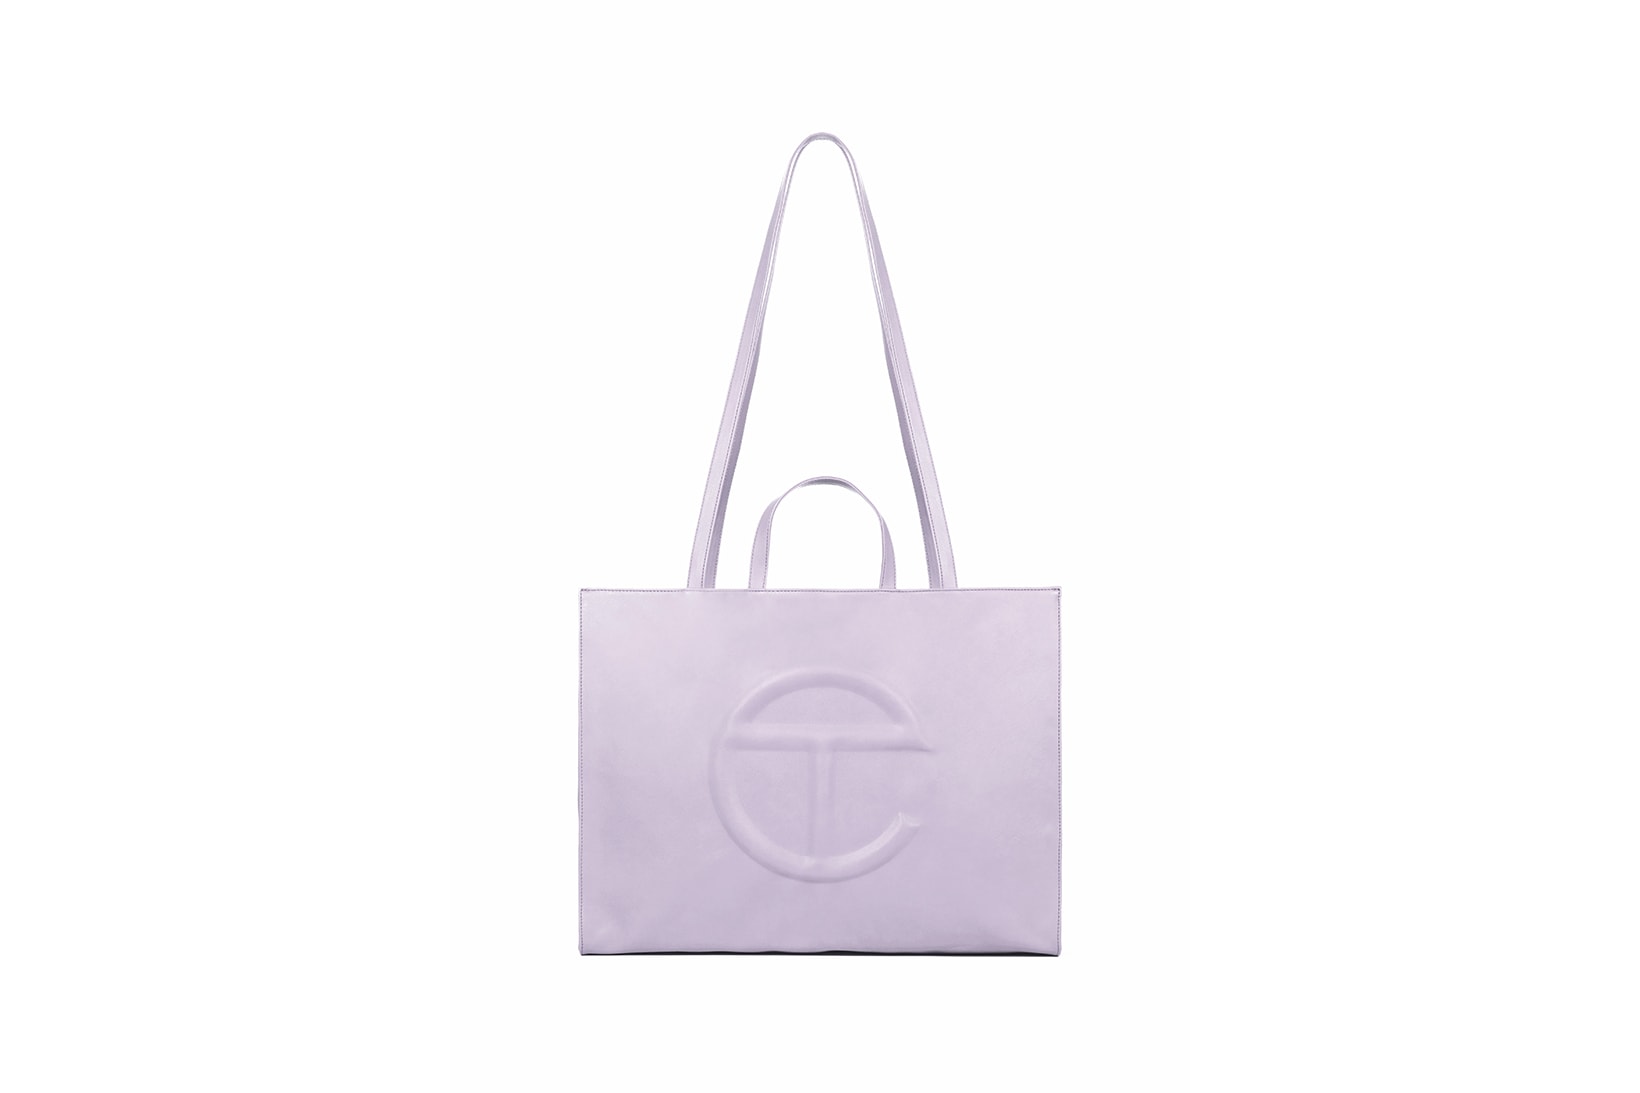 Telfar Shopping Bag New Lavendar Purple Color Large